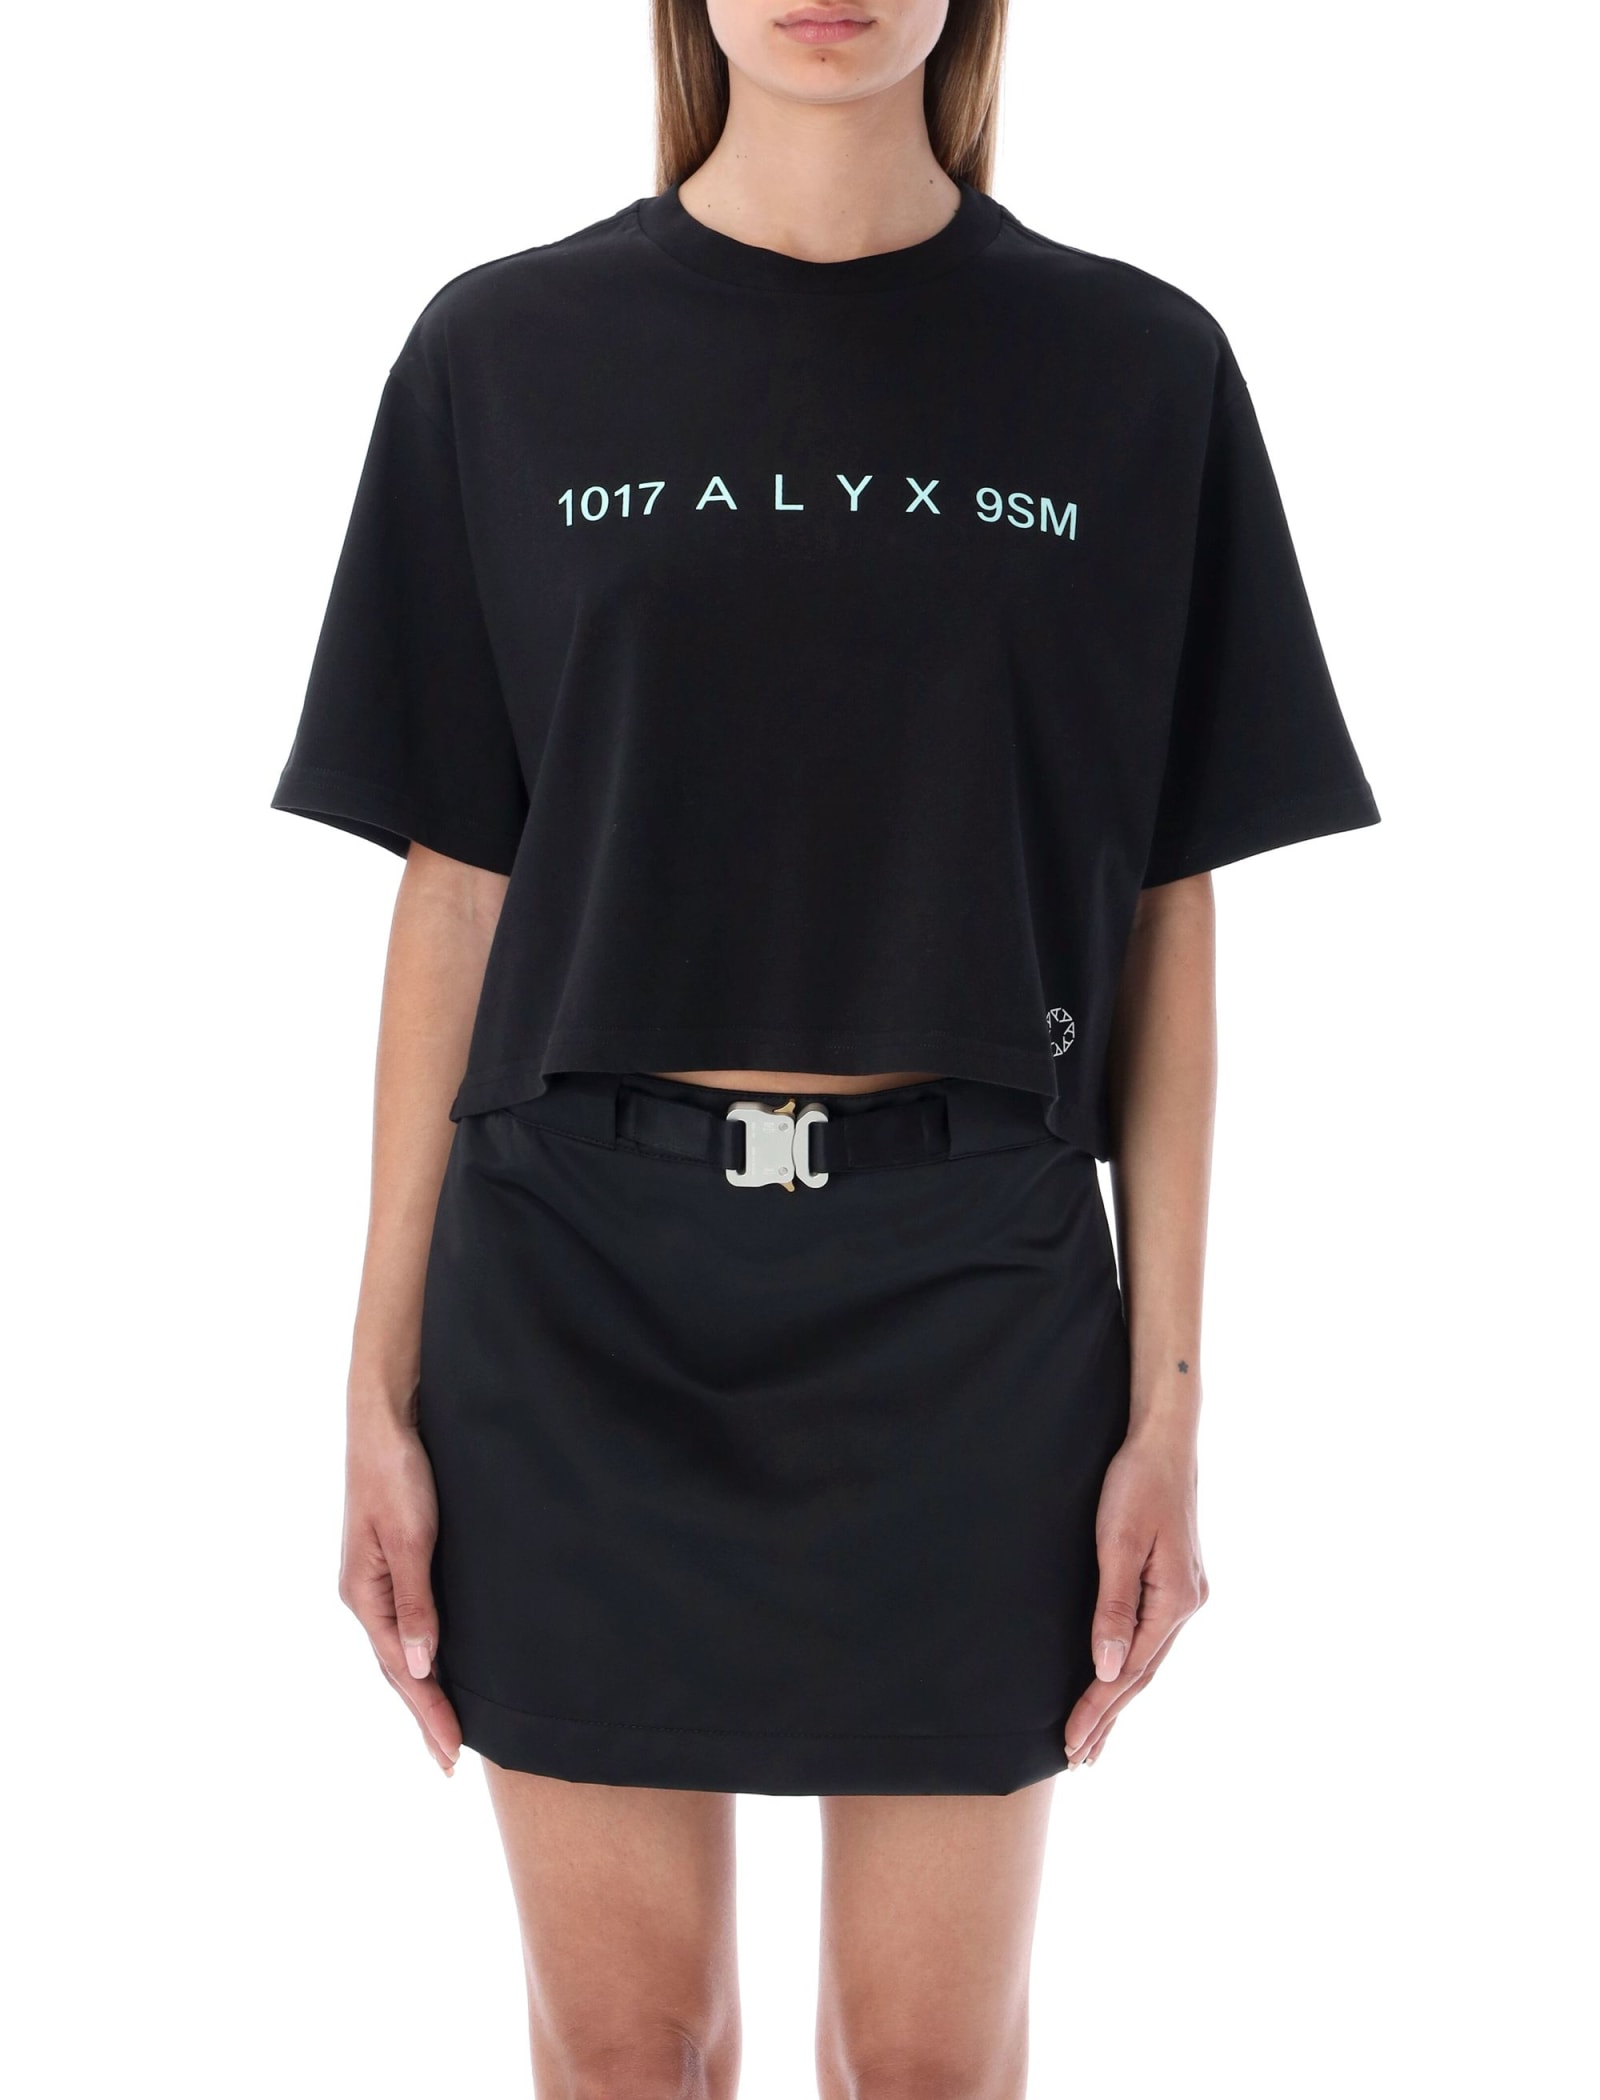 1017 ALYX 9SM Cropped Logo T-shirt